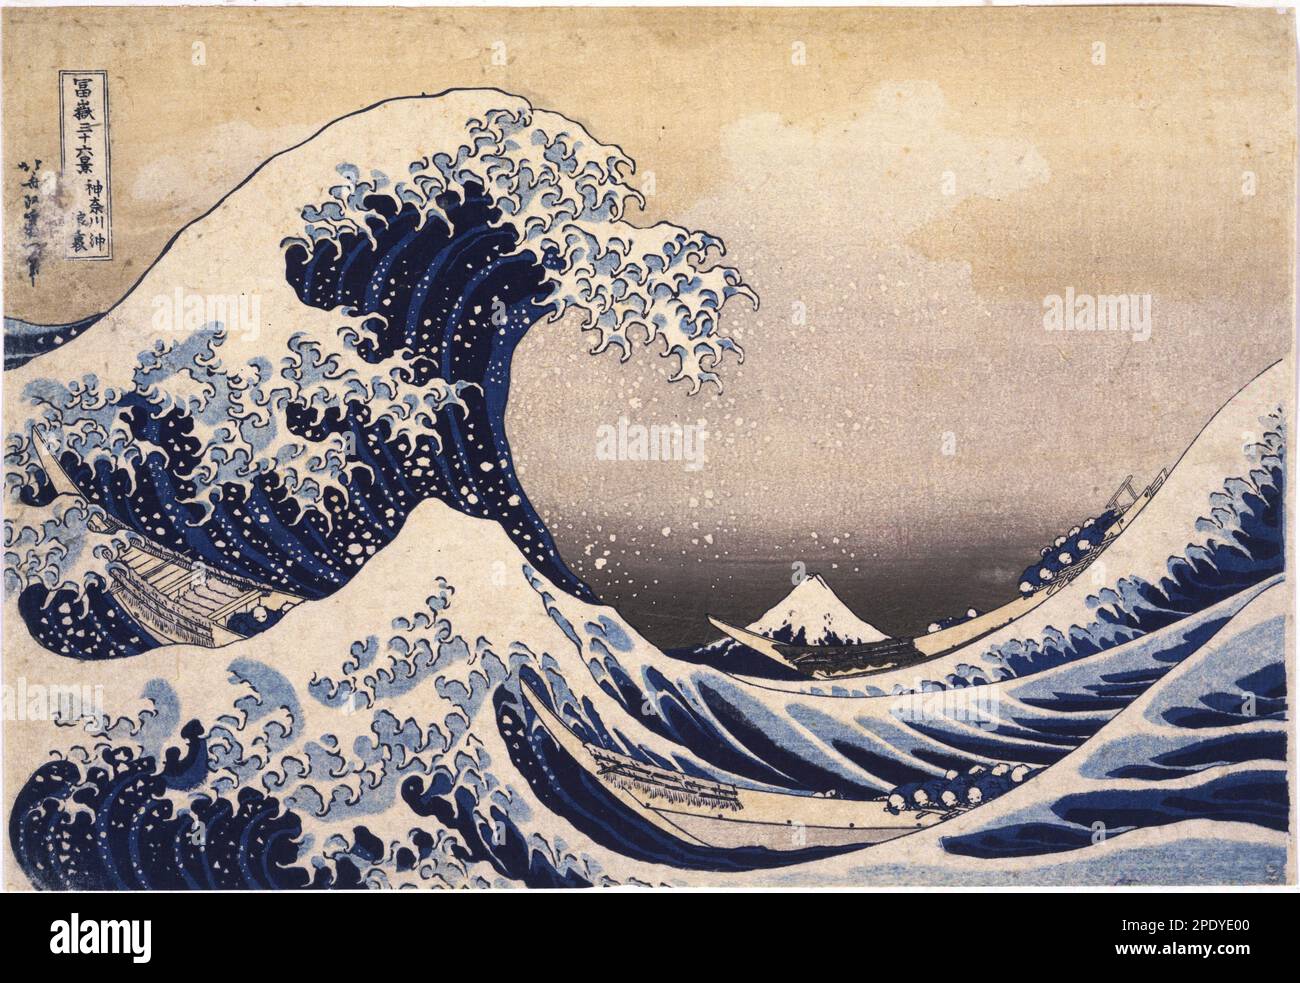 Art Print Hokusai - The Great Wave of Kanagawa - 100 x 50 cm